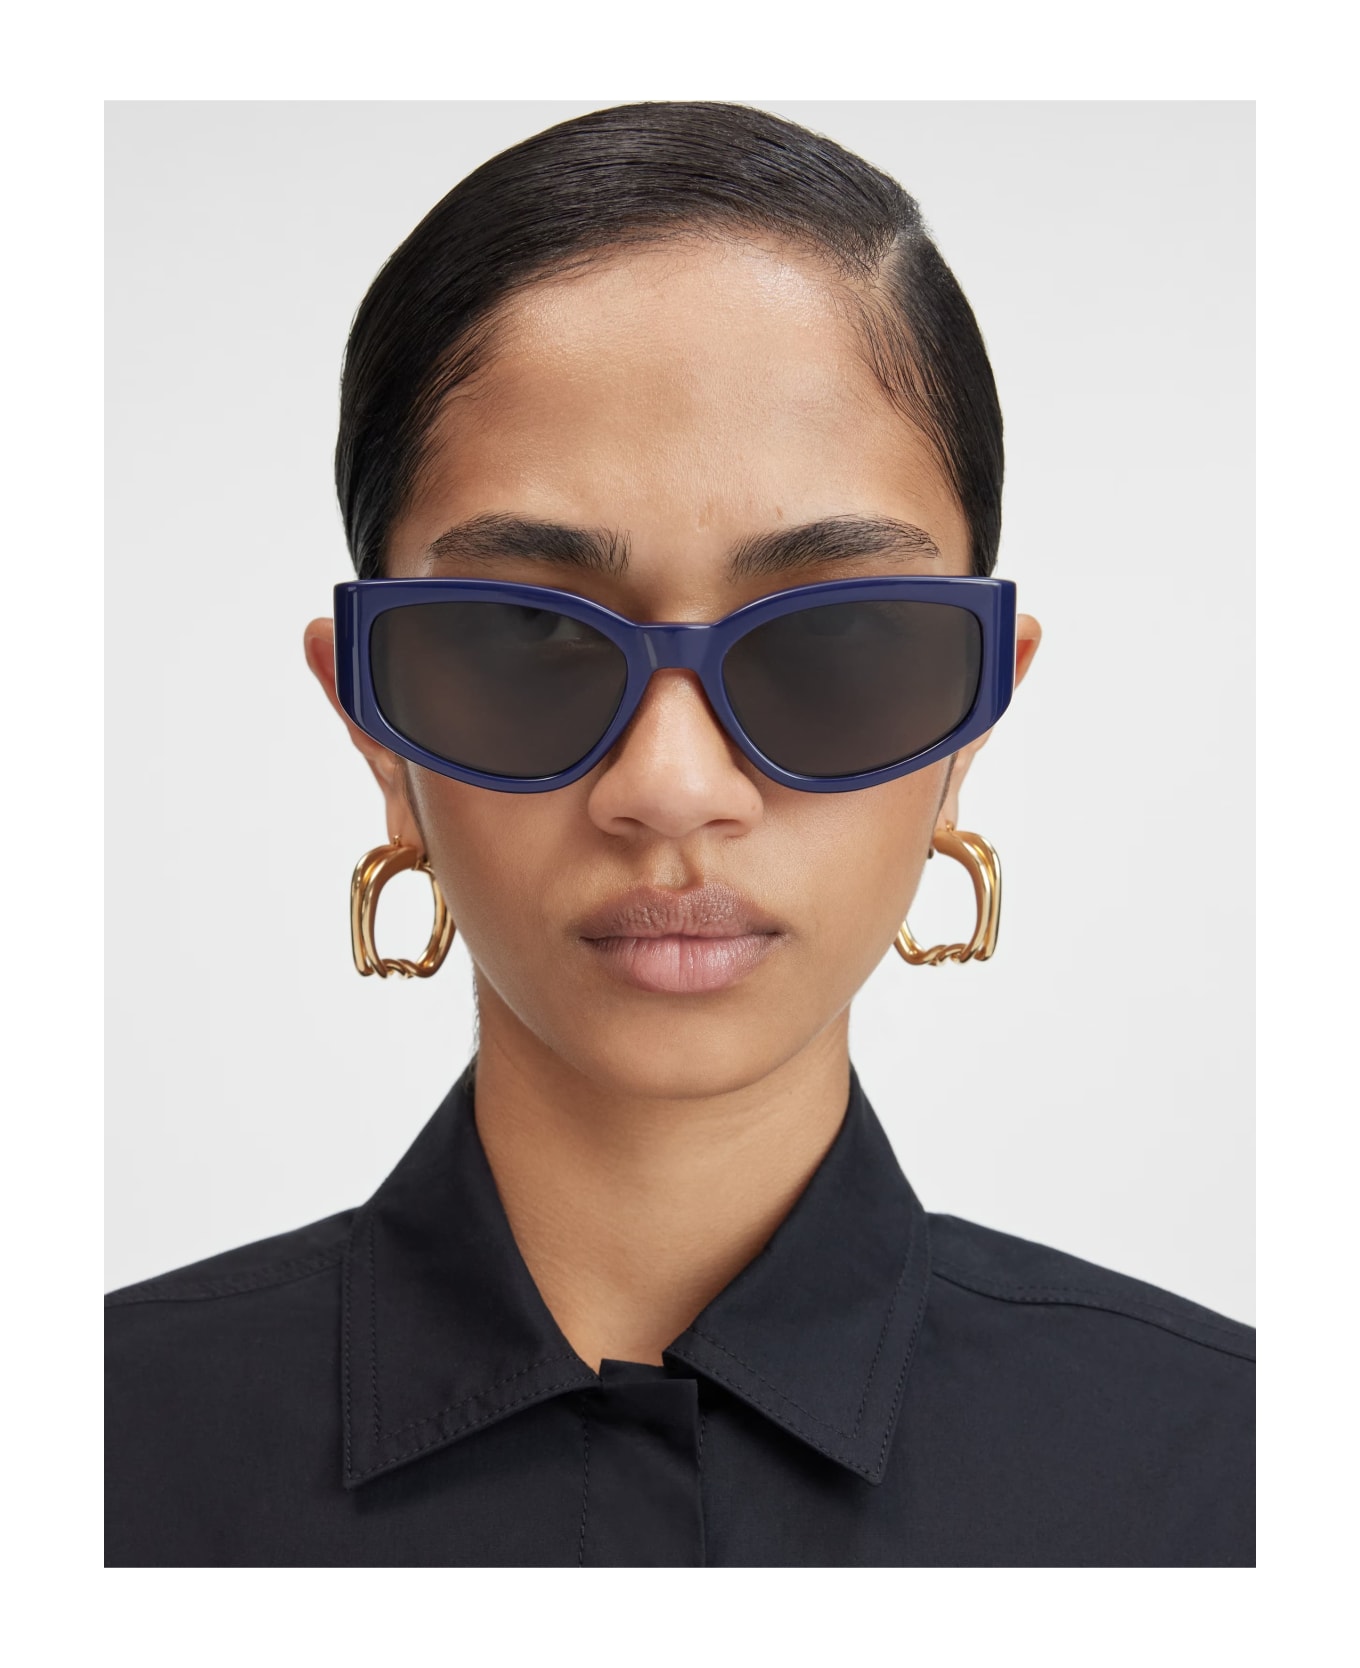 Jacquemus Gala - Navy Sunglasses - navy blue サングラス